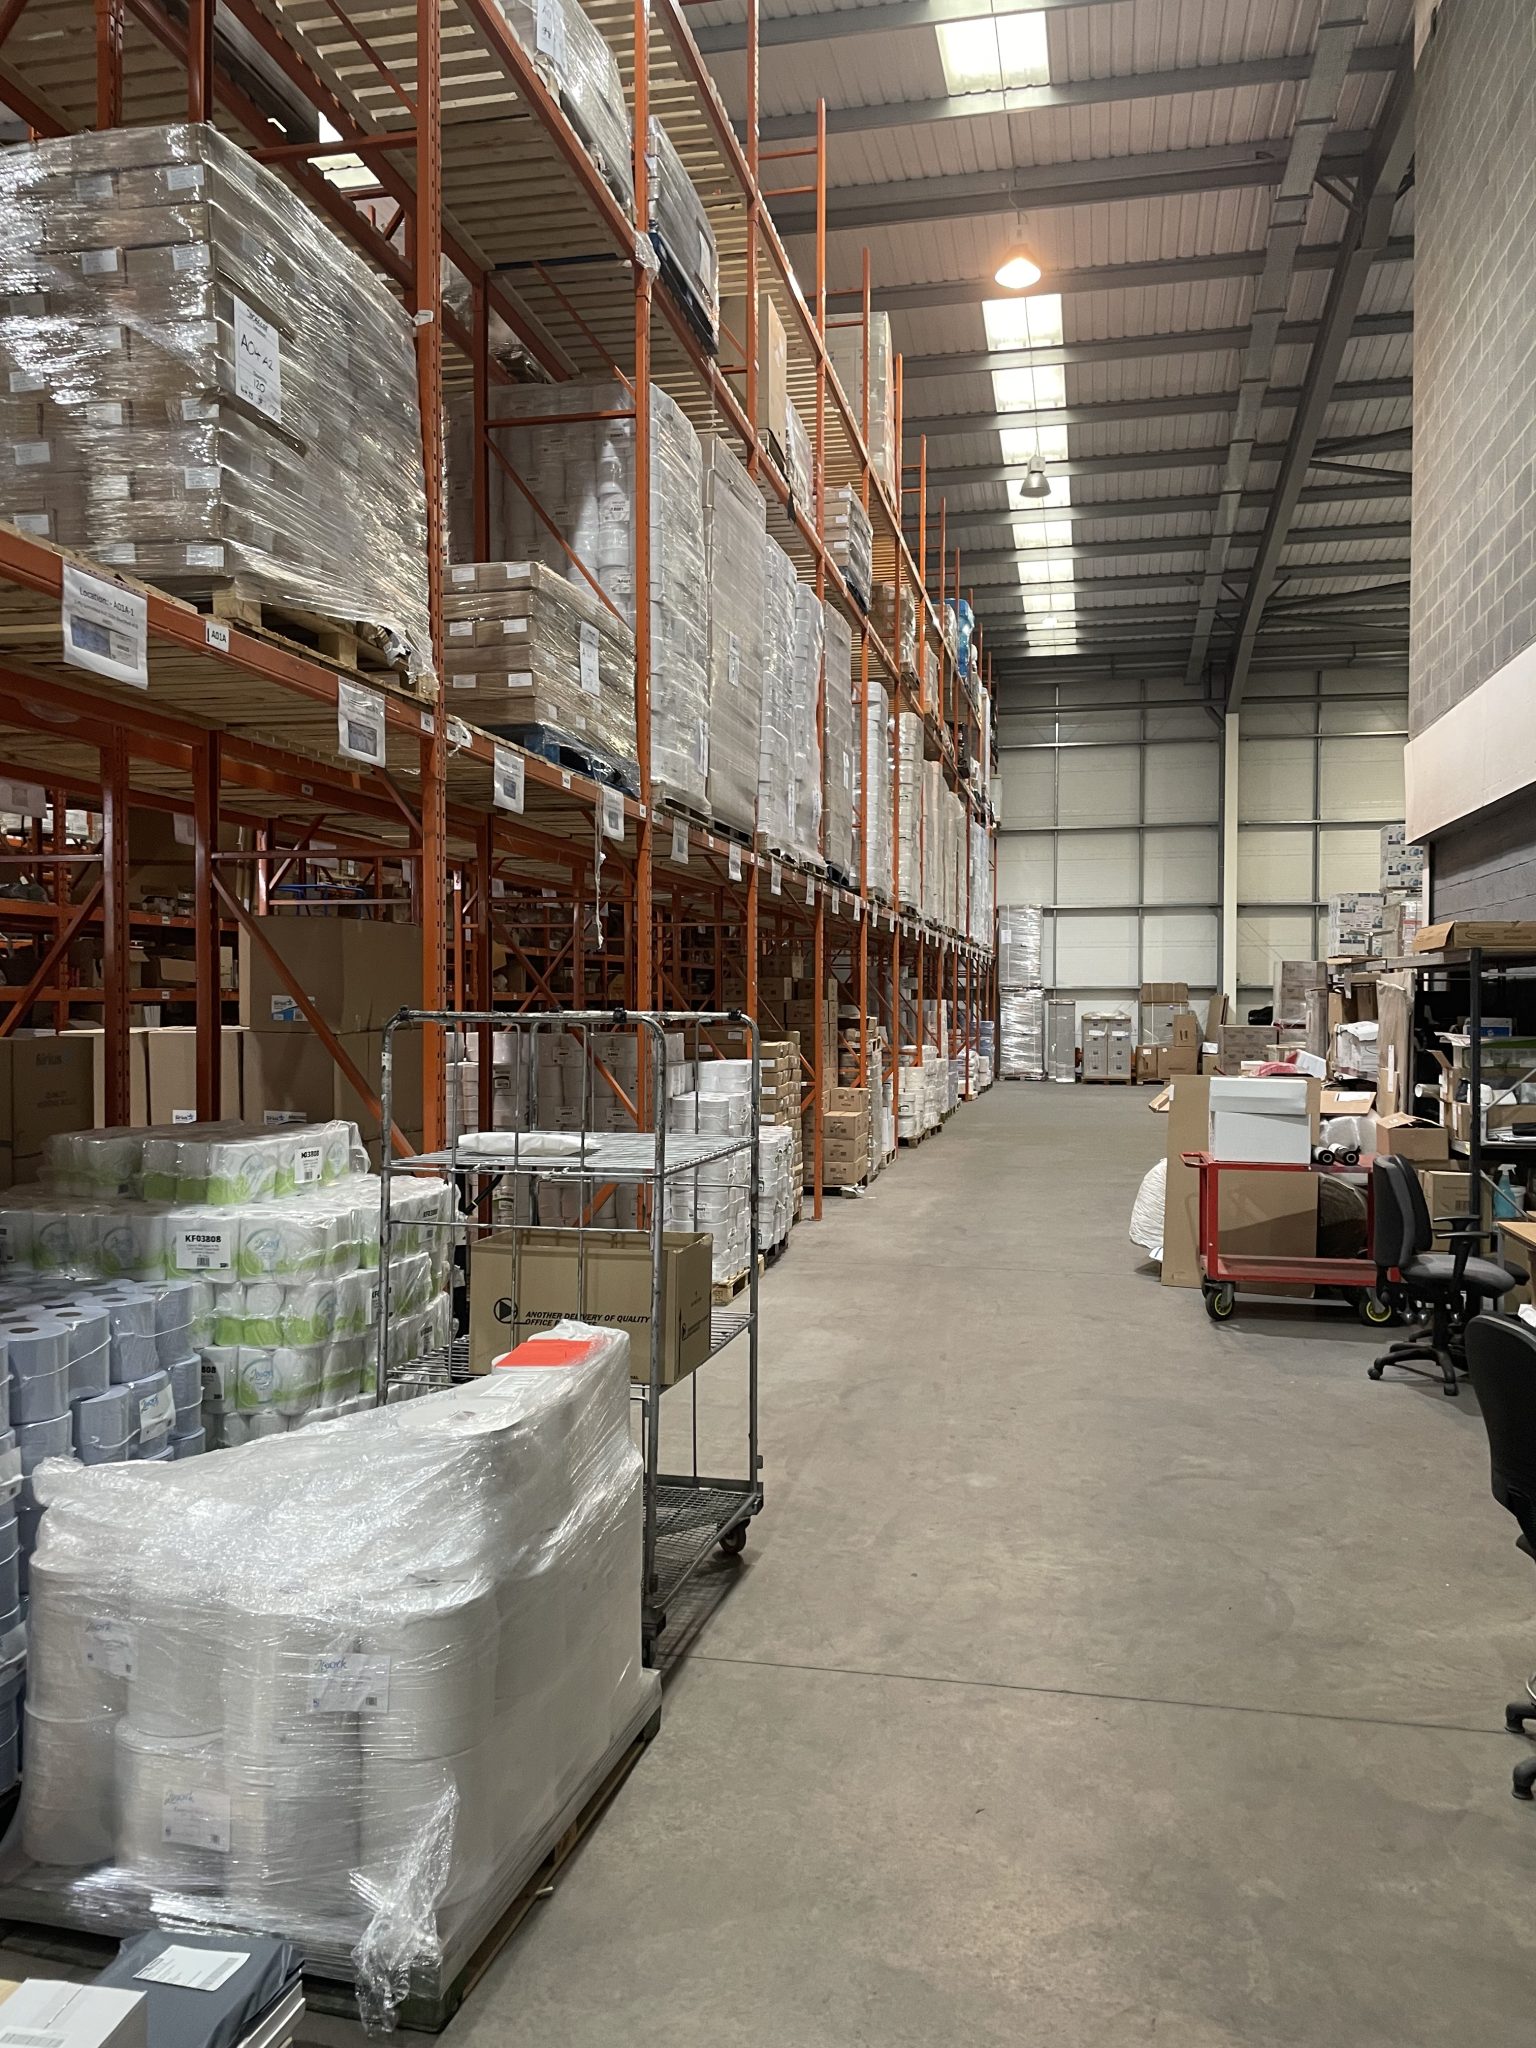 Warehousing environment storing, picking and packaging.